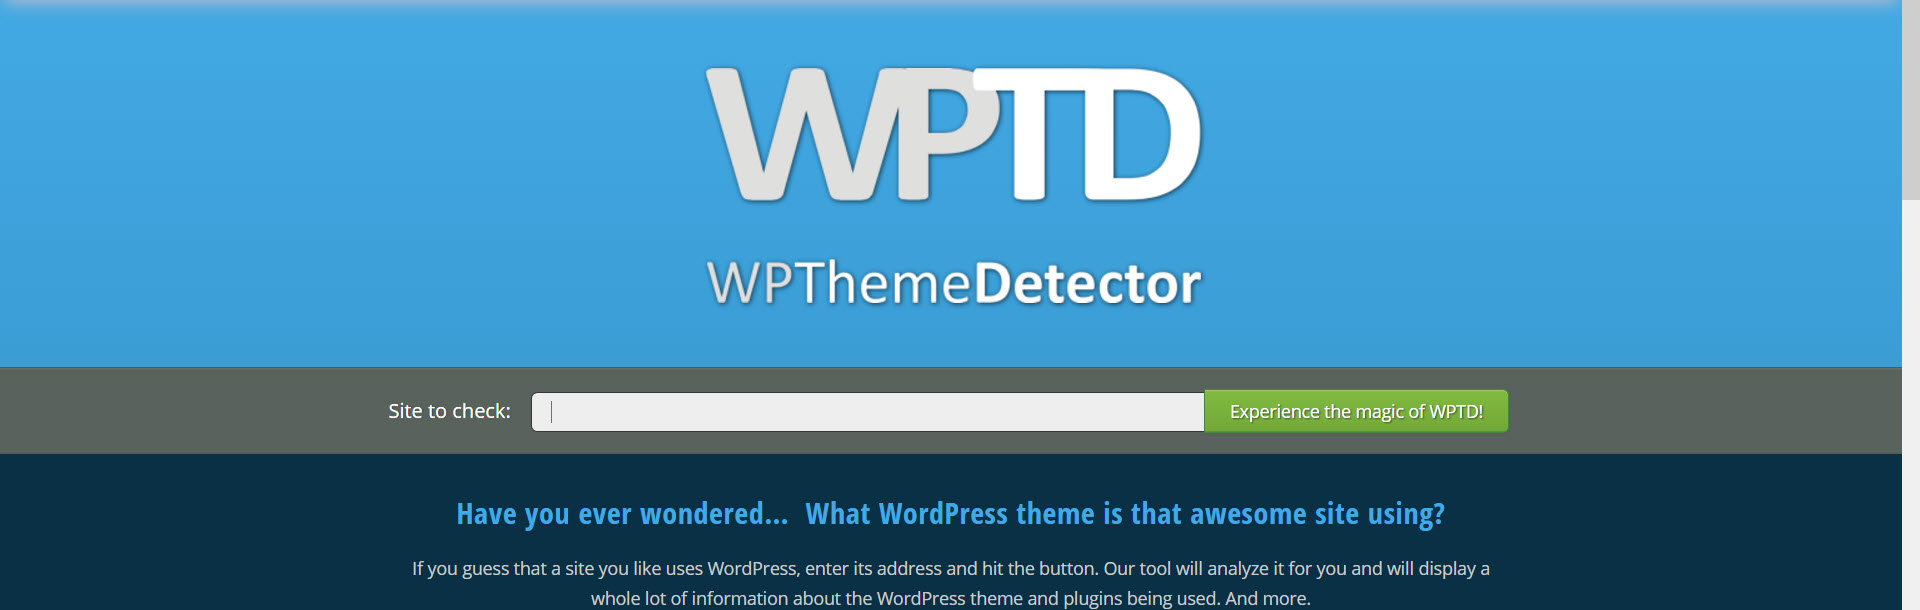 WP theme detector